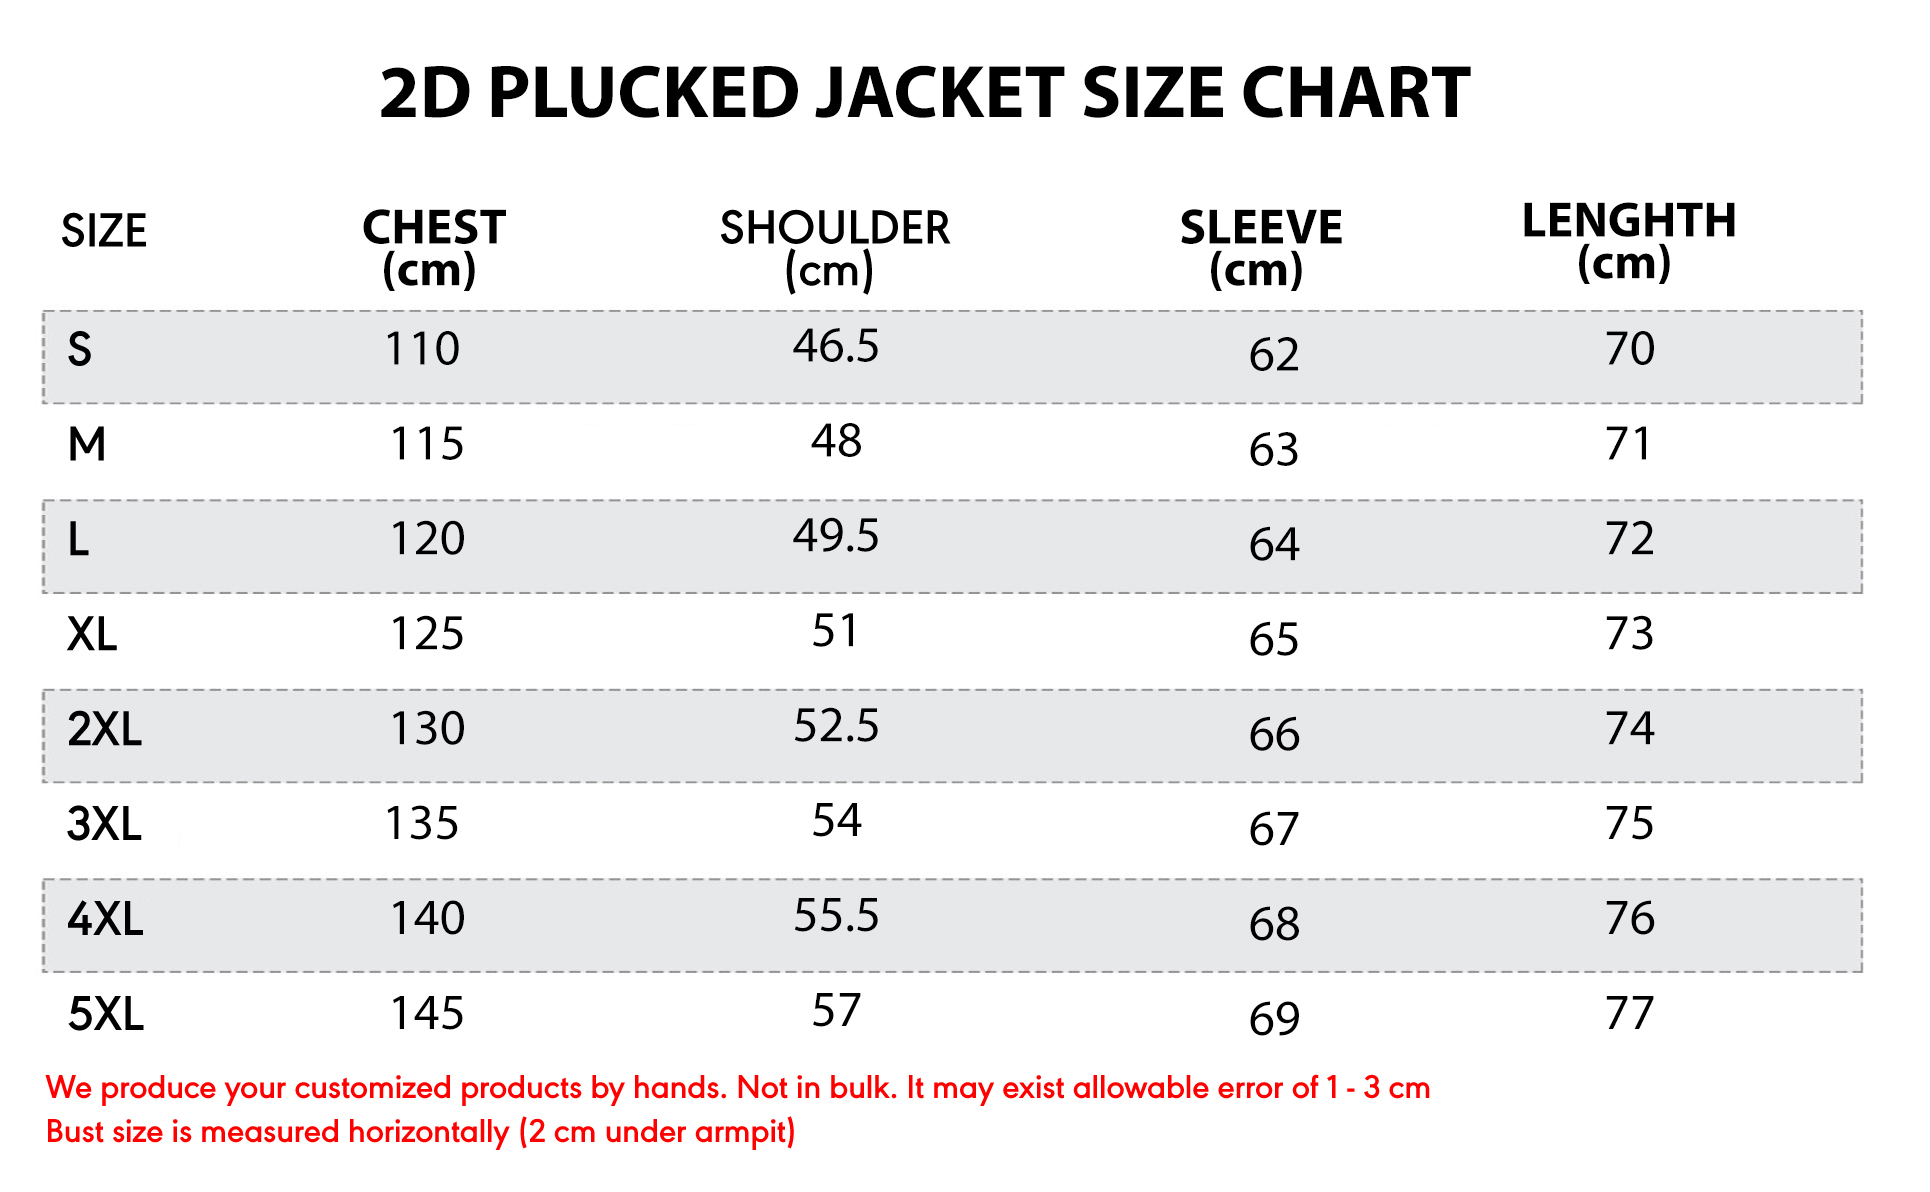 Arizona State Sun Devils NCAA Fleece Leather Jacket's Product Pictures - Kaishirts.com